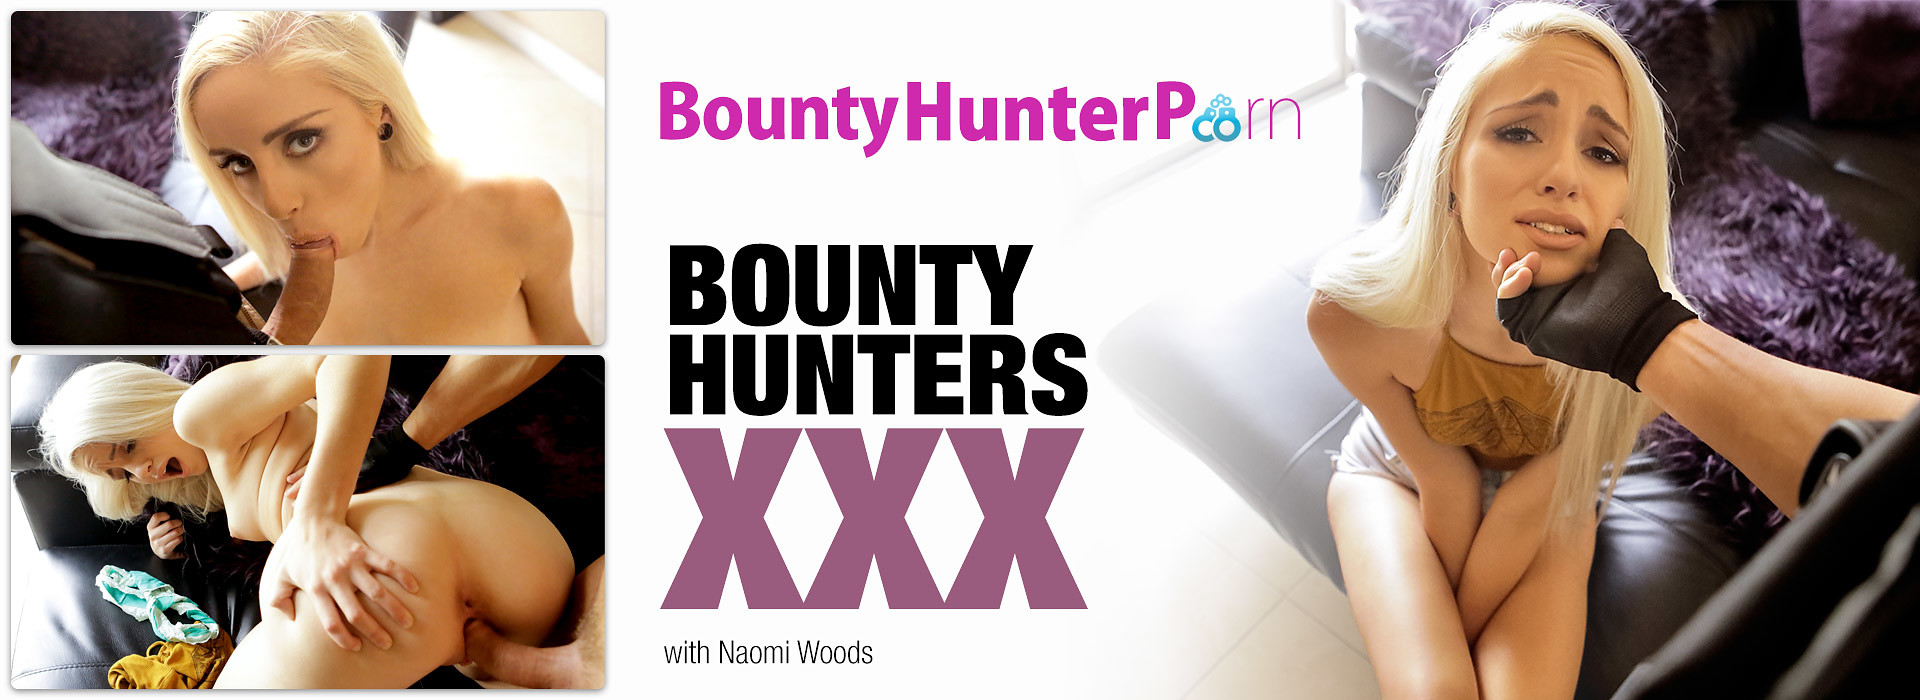 Vax Com Xxx - Bounty Hunter Porn